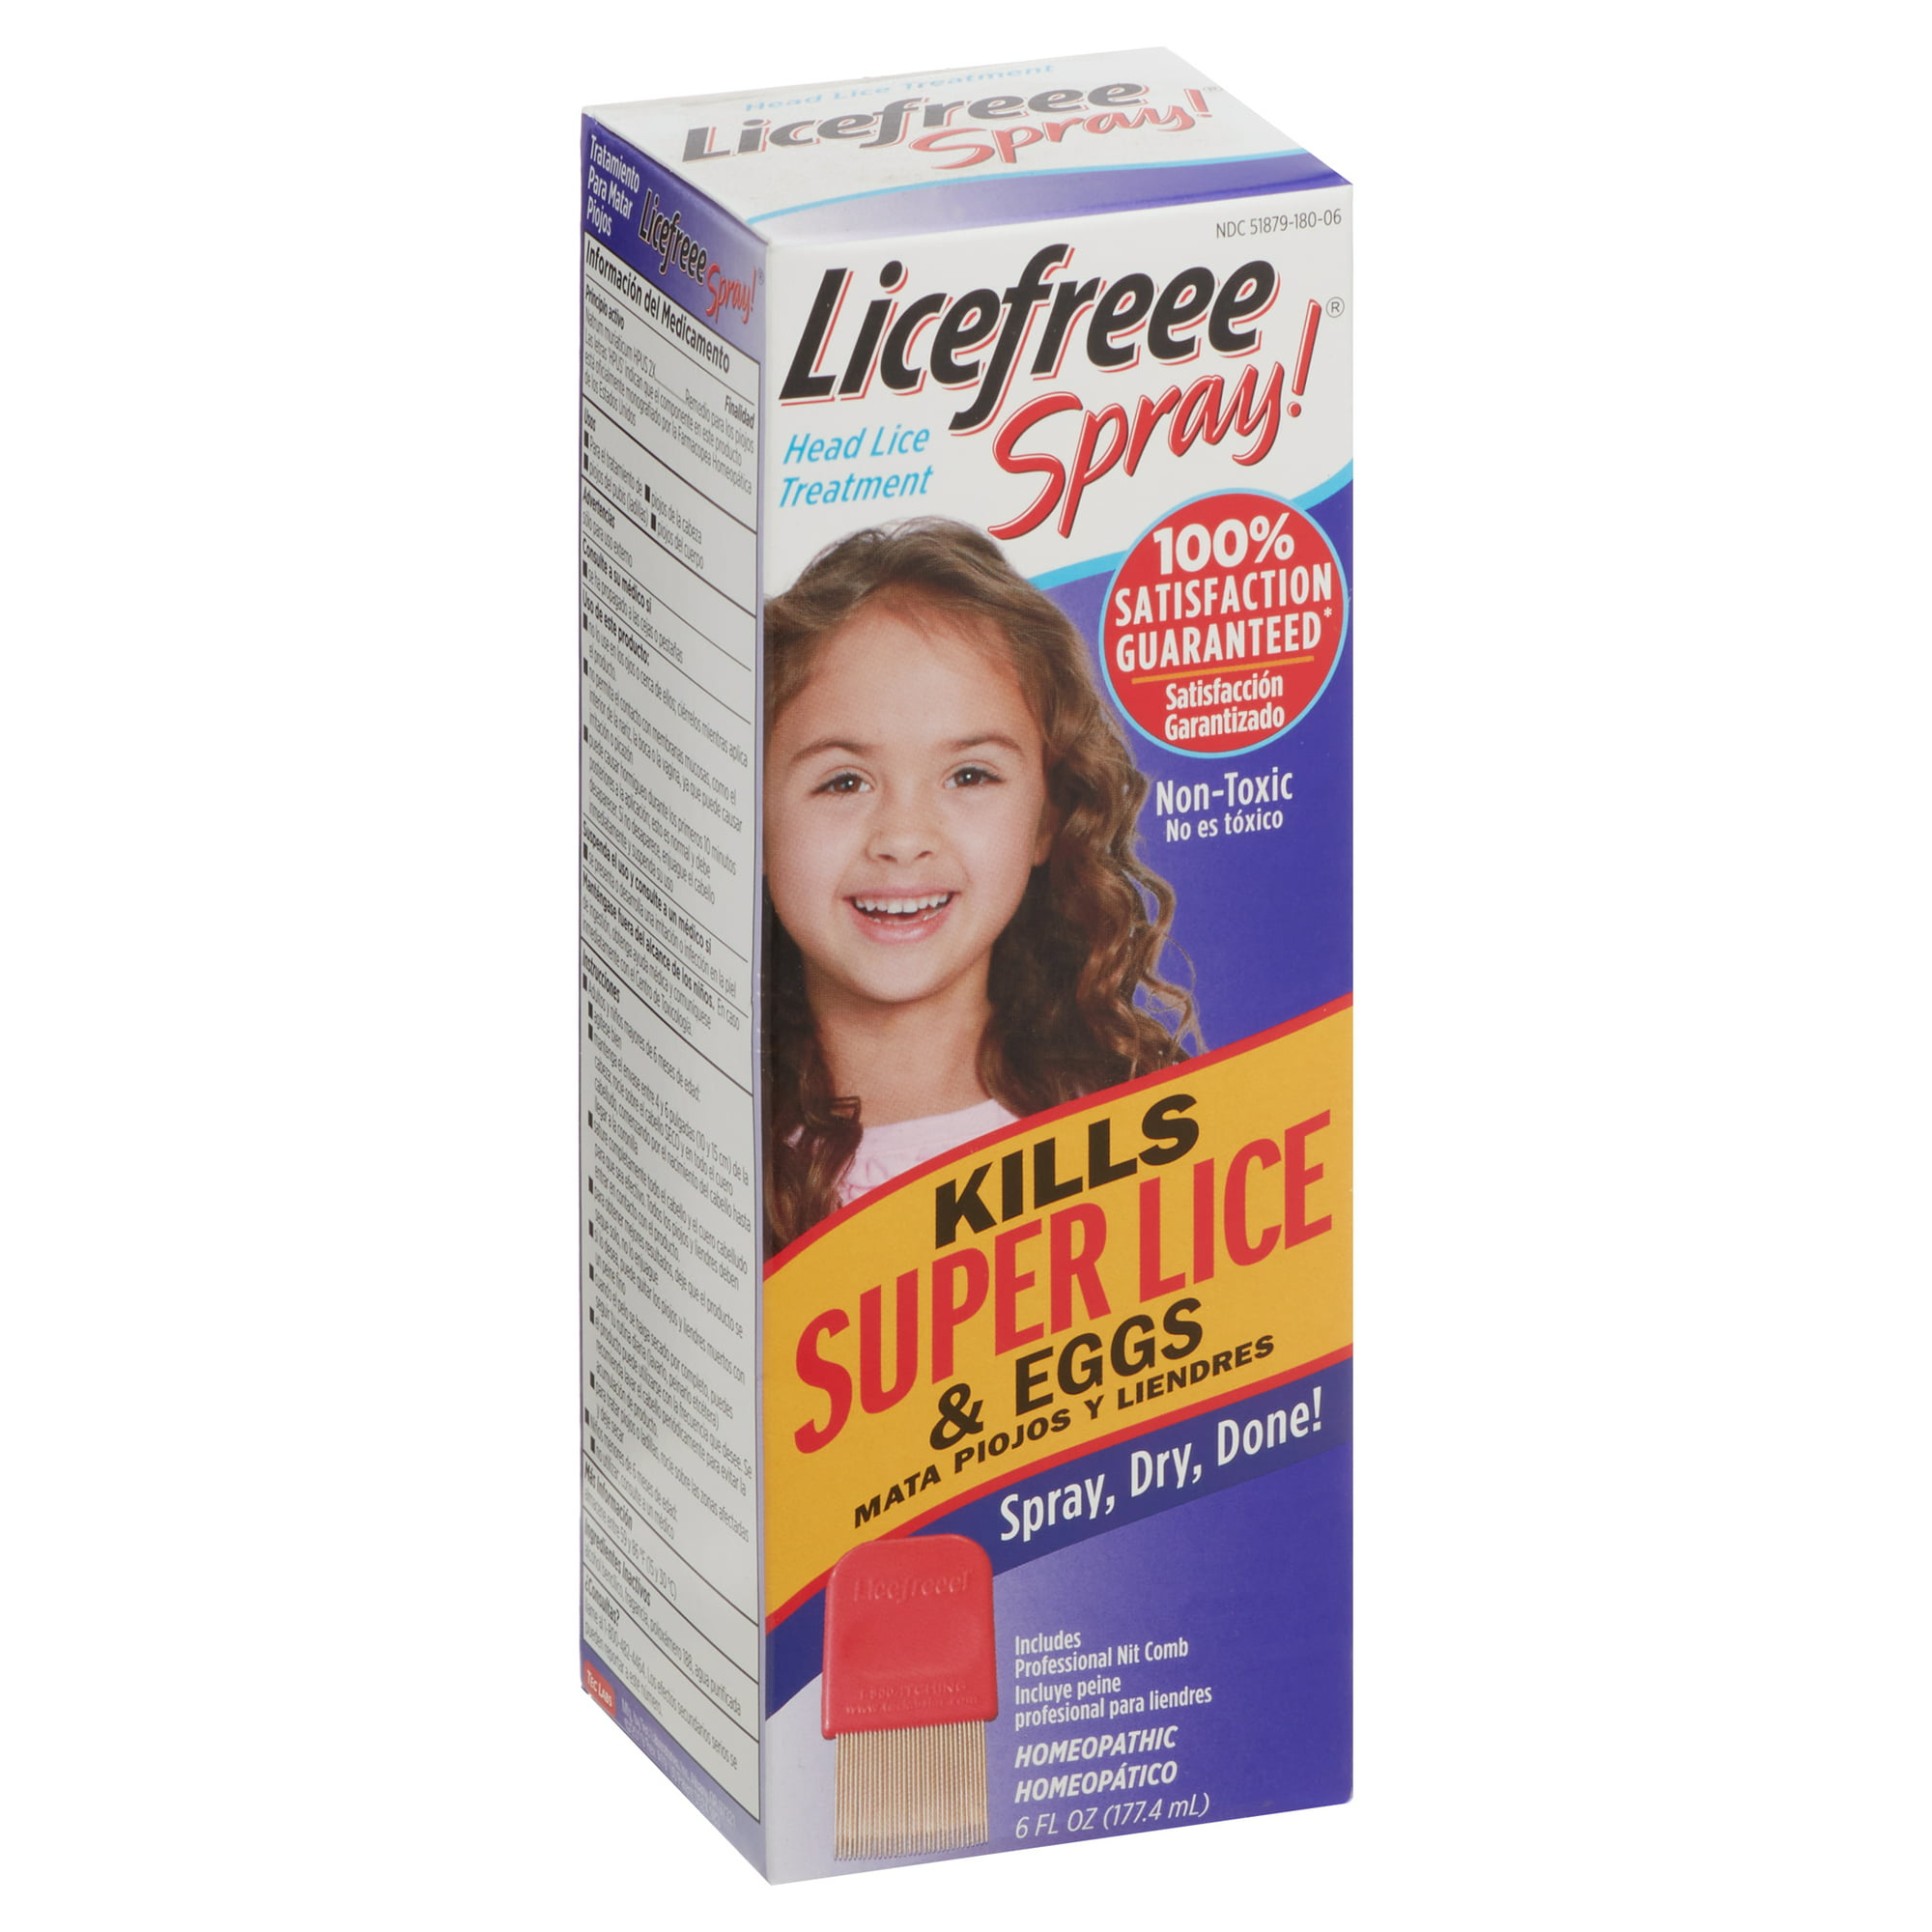 Licefreee Spray! Instant Head Lice Treatment, 6.0 fl oz